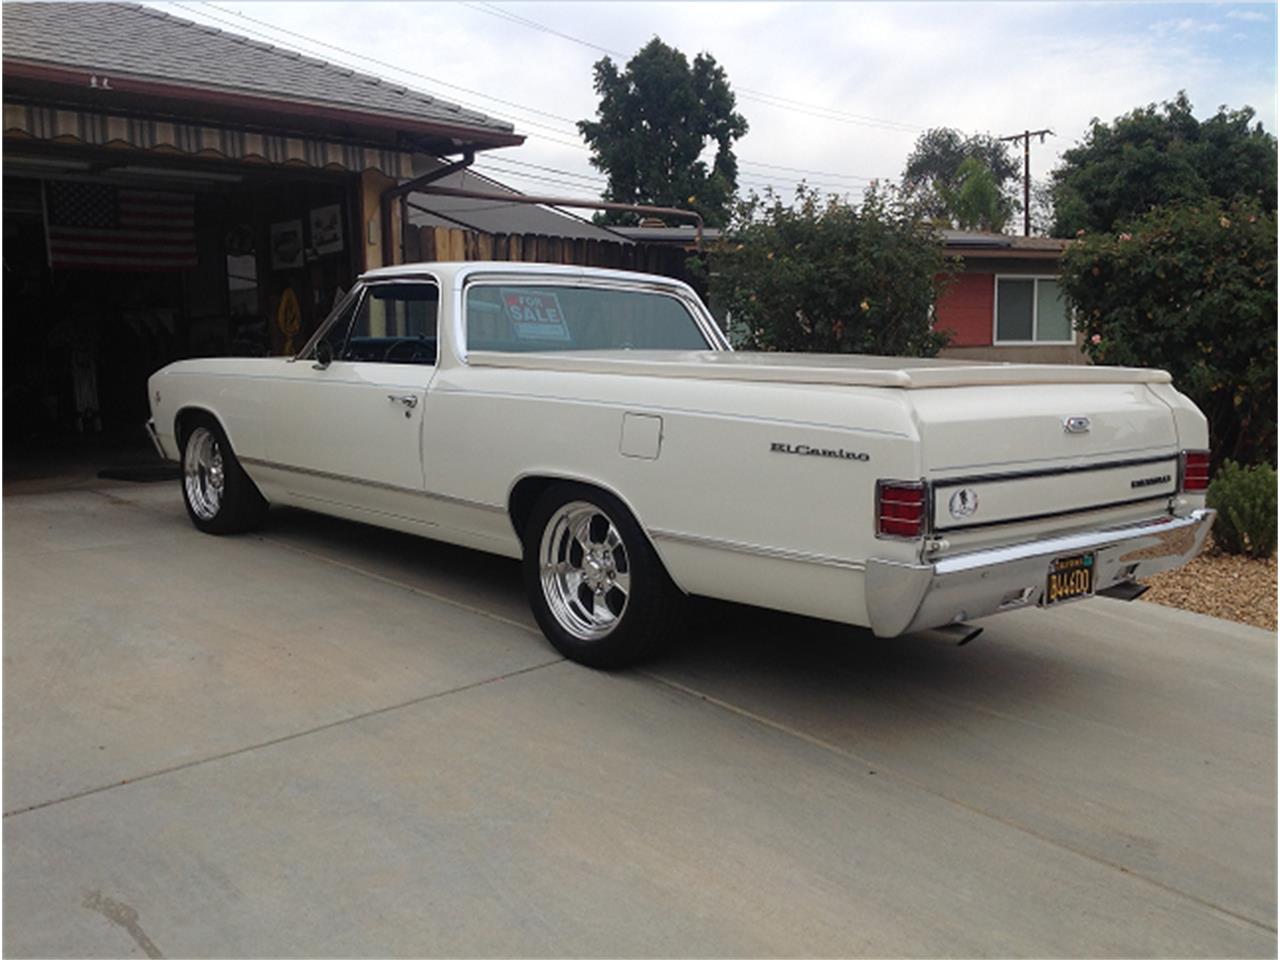 1967 Chevrolet El Camino for sale in Whittier, CA